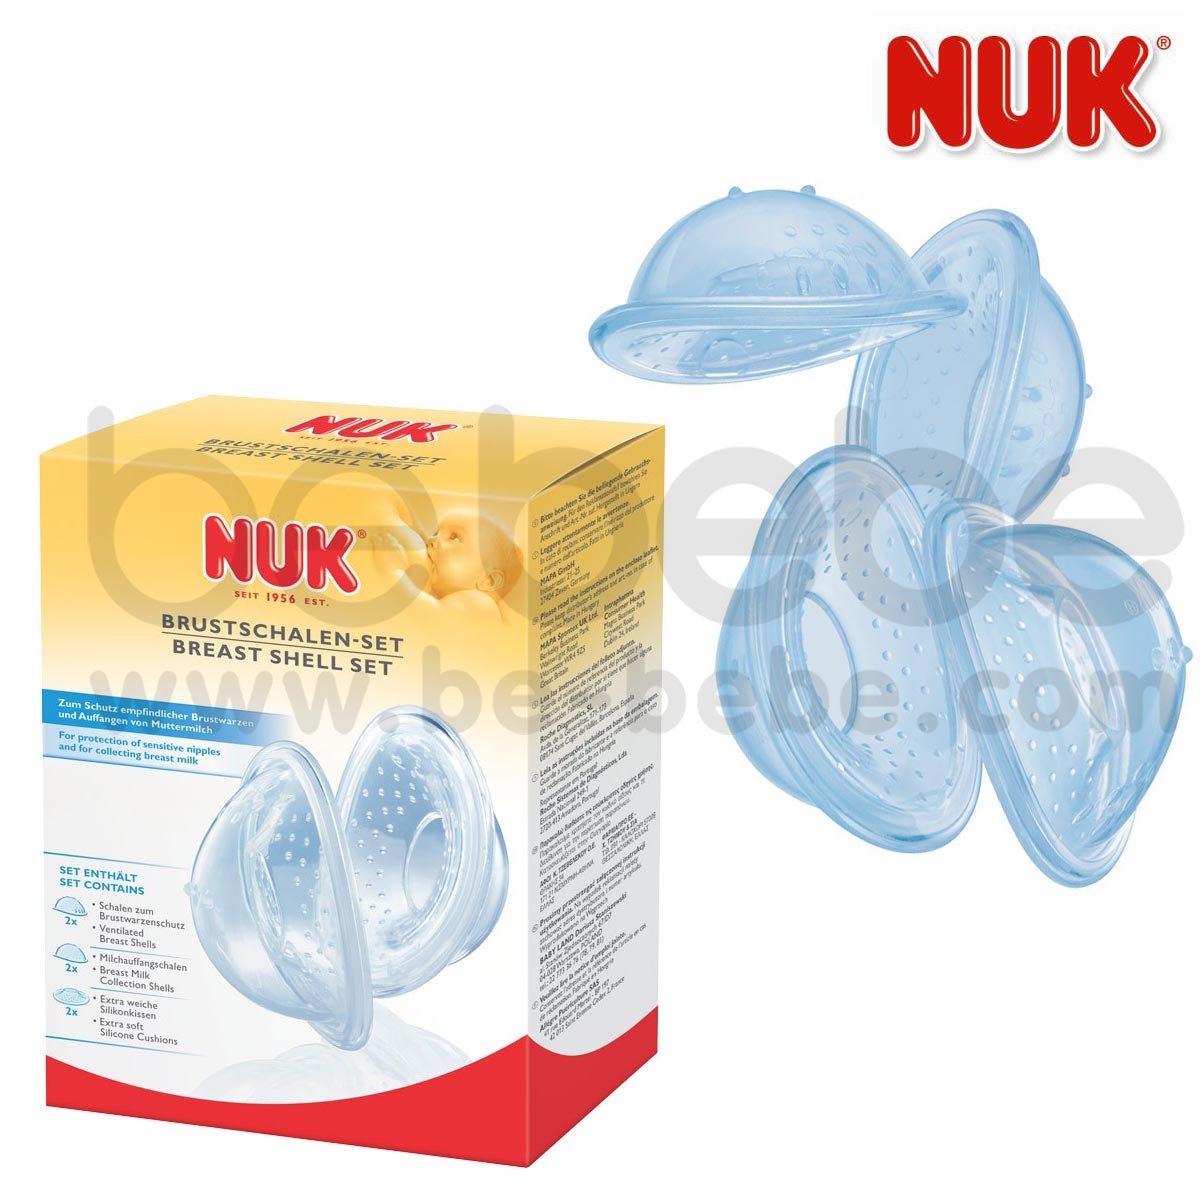 NUK:Breast Shell Set